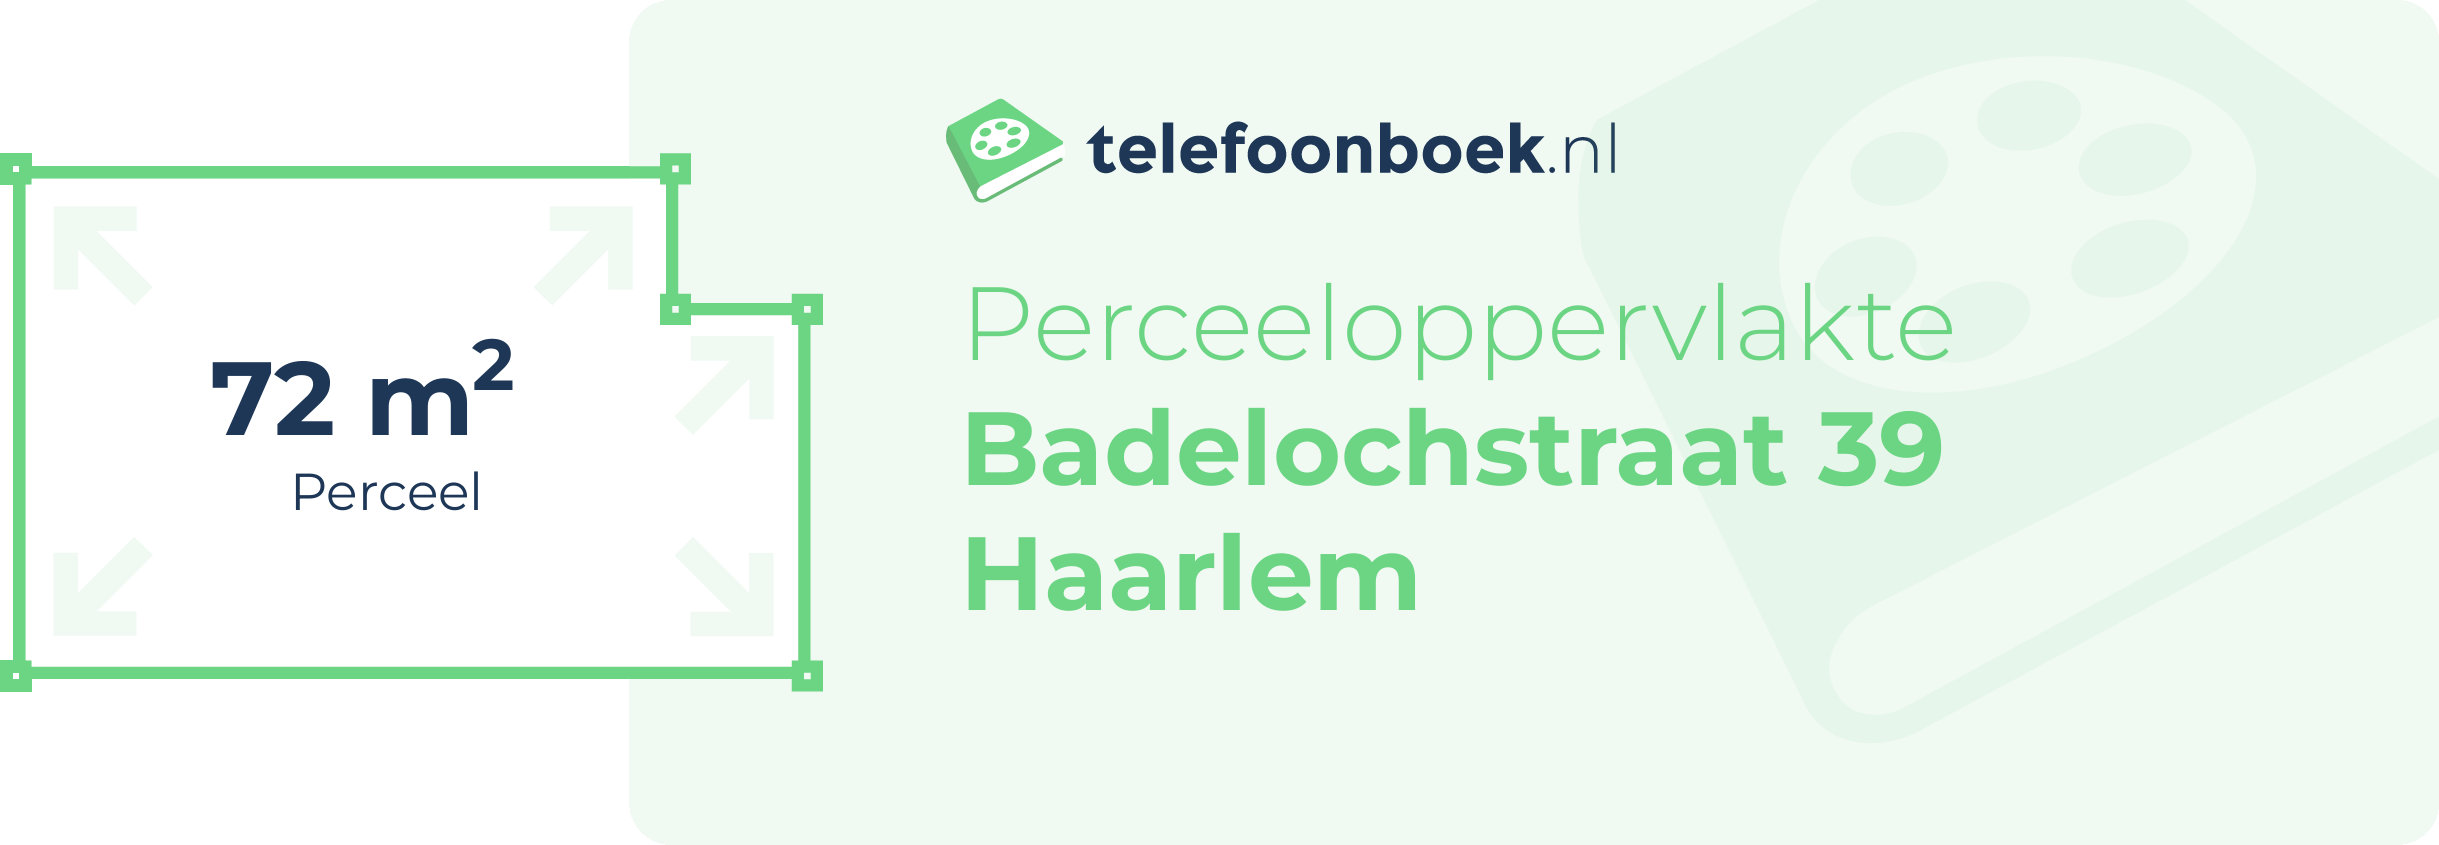 Perceeloppervlakte Badelochstraat 39 Haarlem